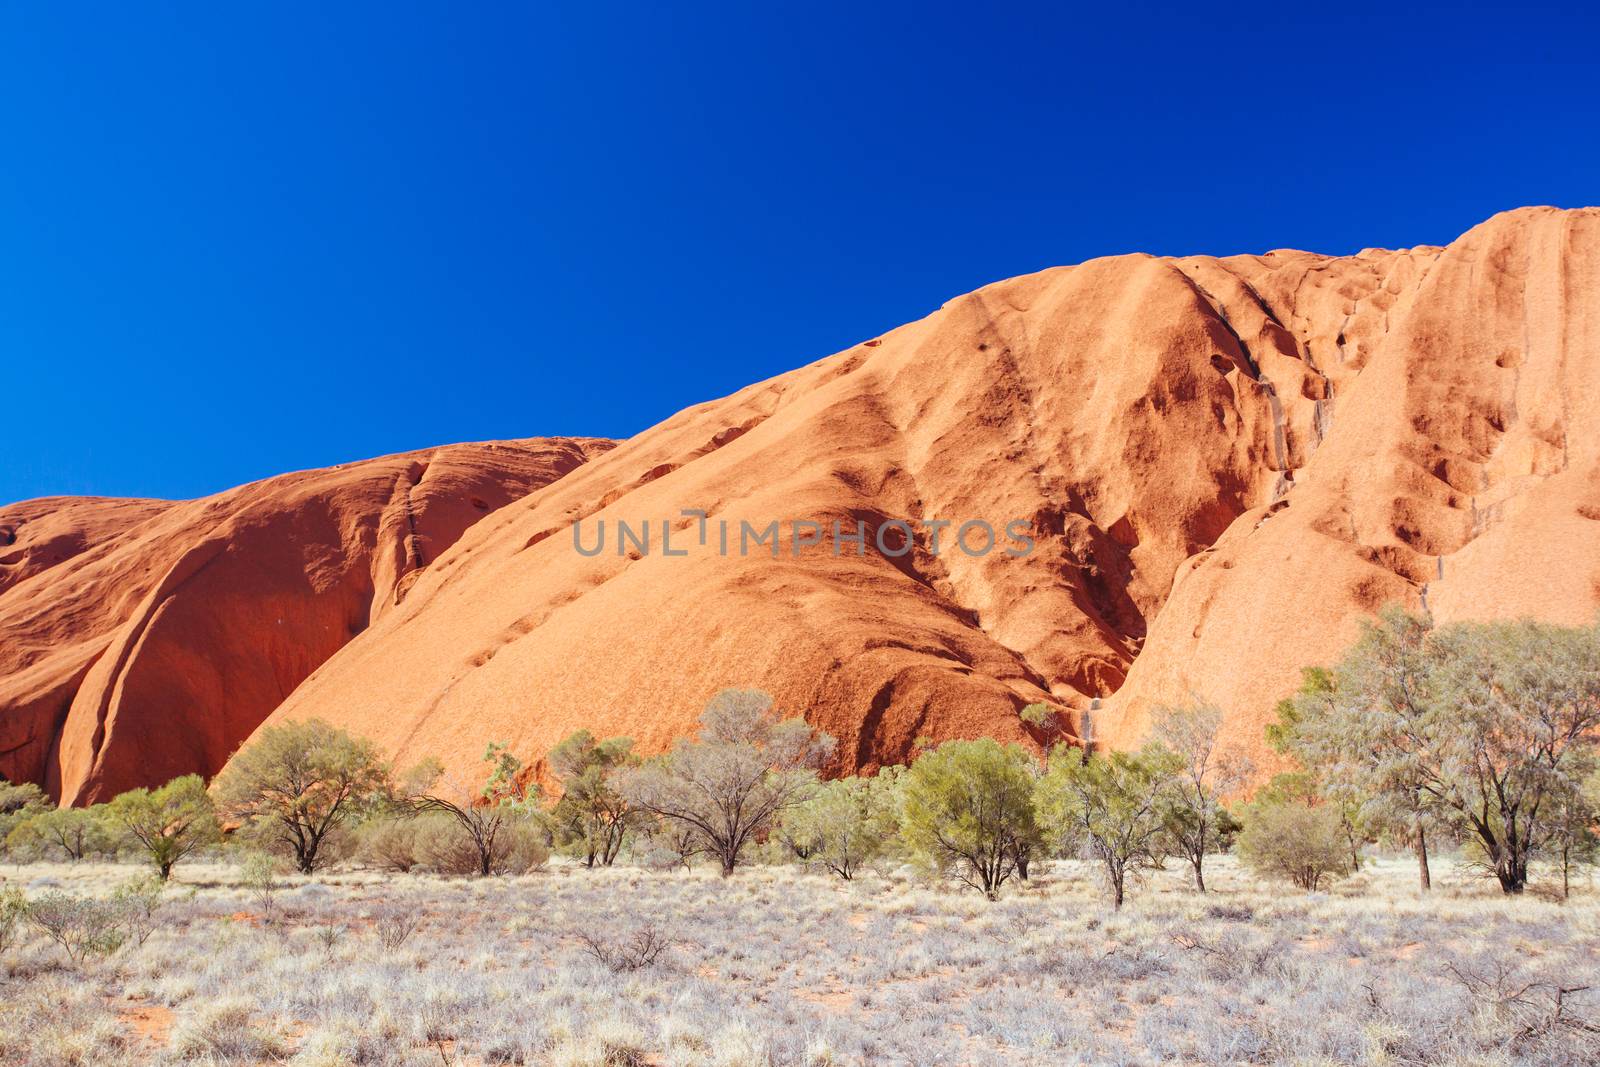 Closeup of Uluru in Northern Territory Australia by FiledIMAGE